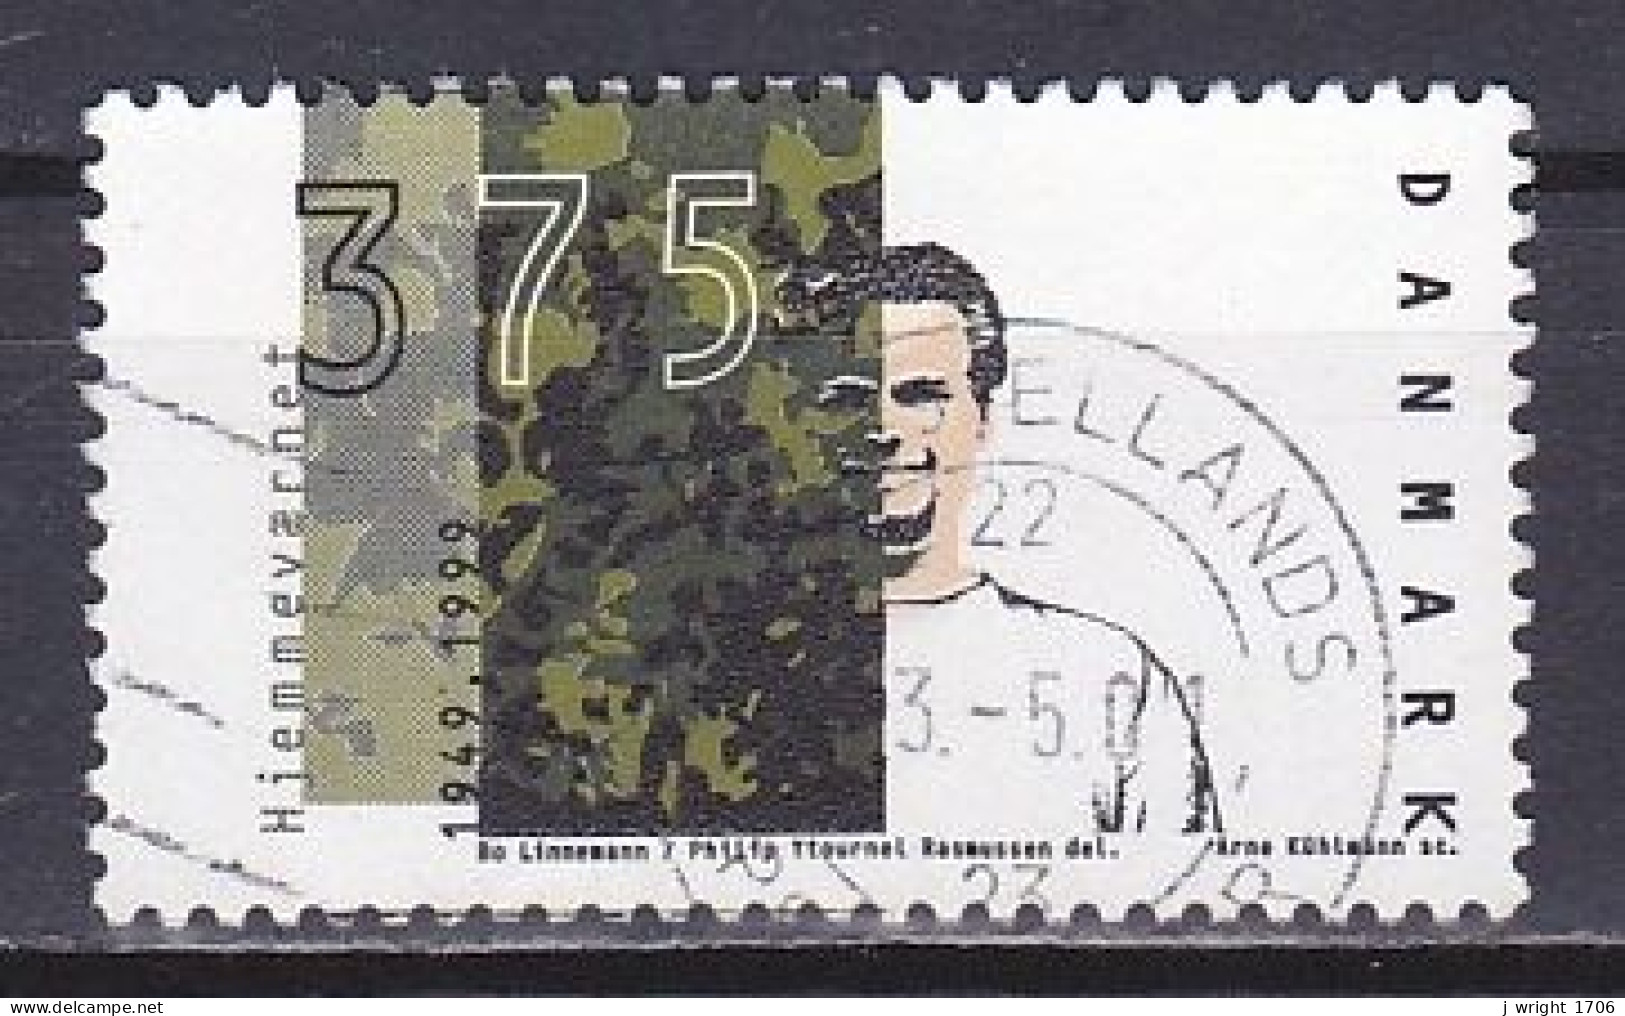 Denmark, 1999, Home Guard 50th Anniv, 3.75kr, USED - Usati